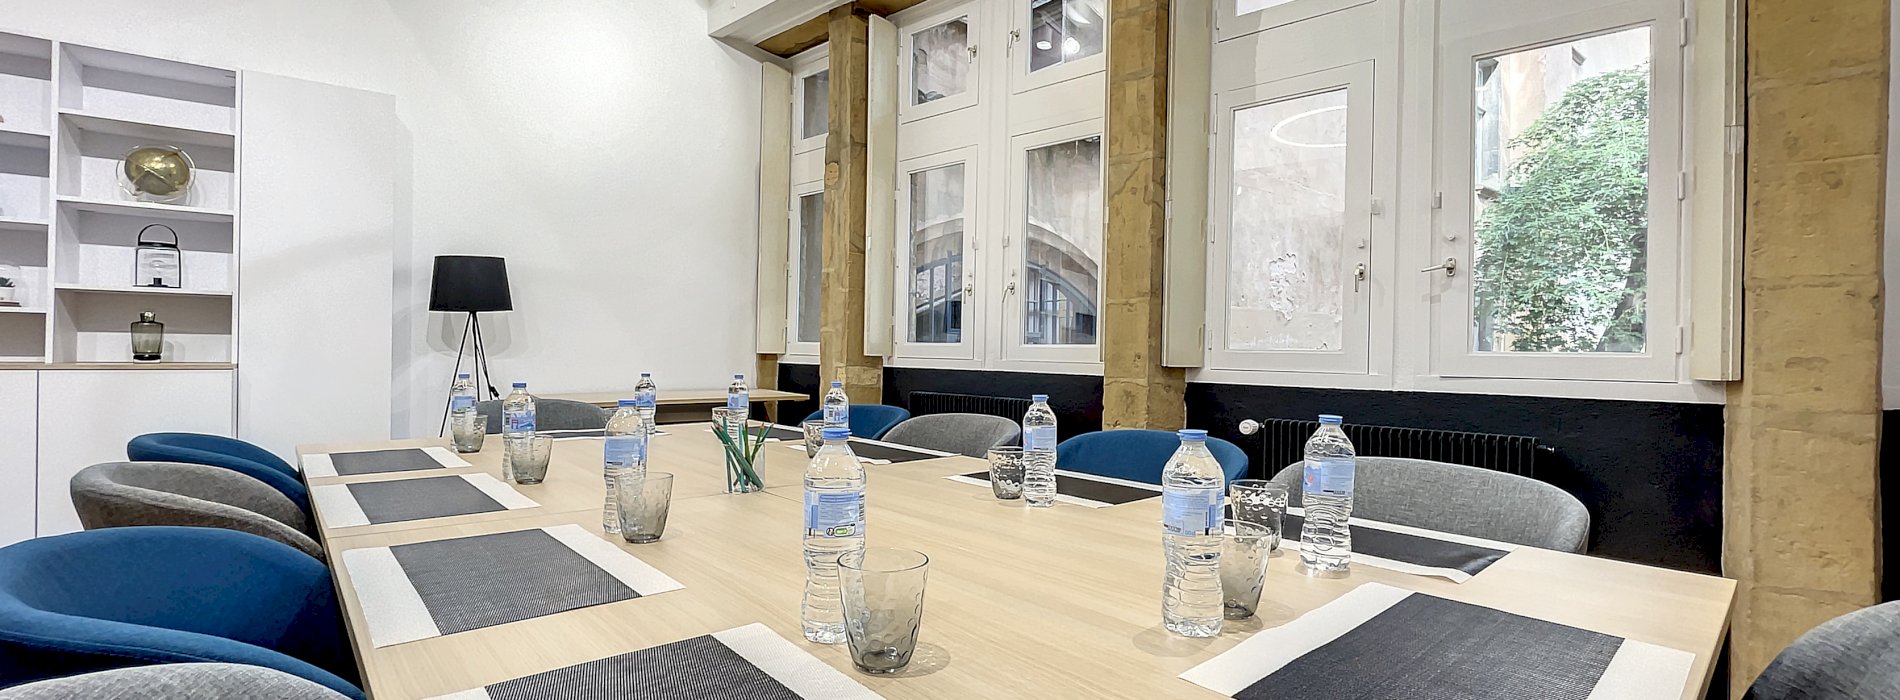 Kanpai Tourisme - Concept of the Meeting Room